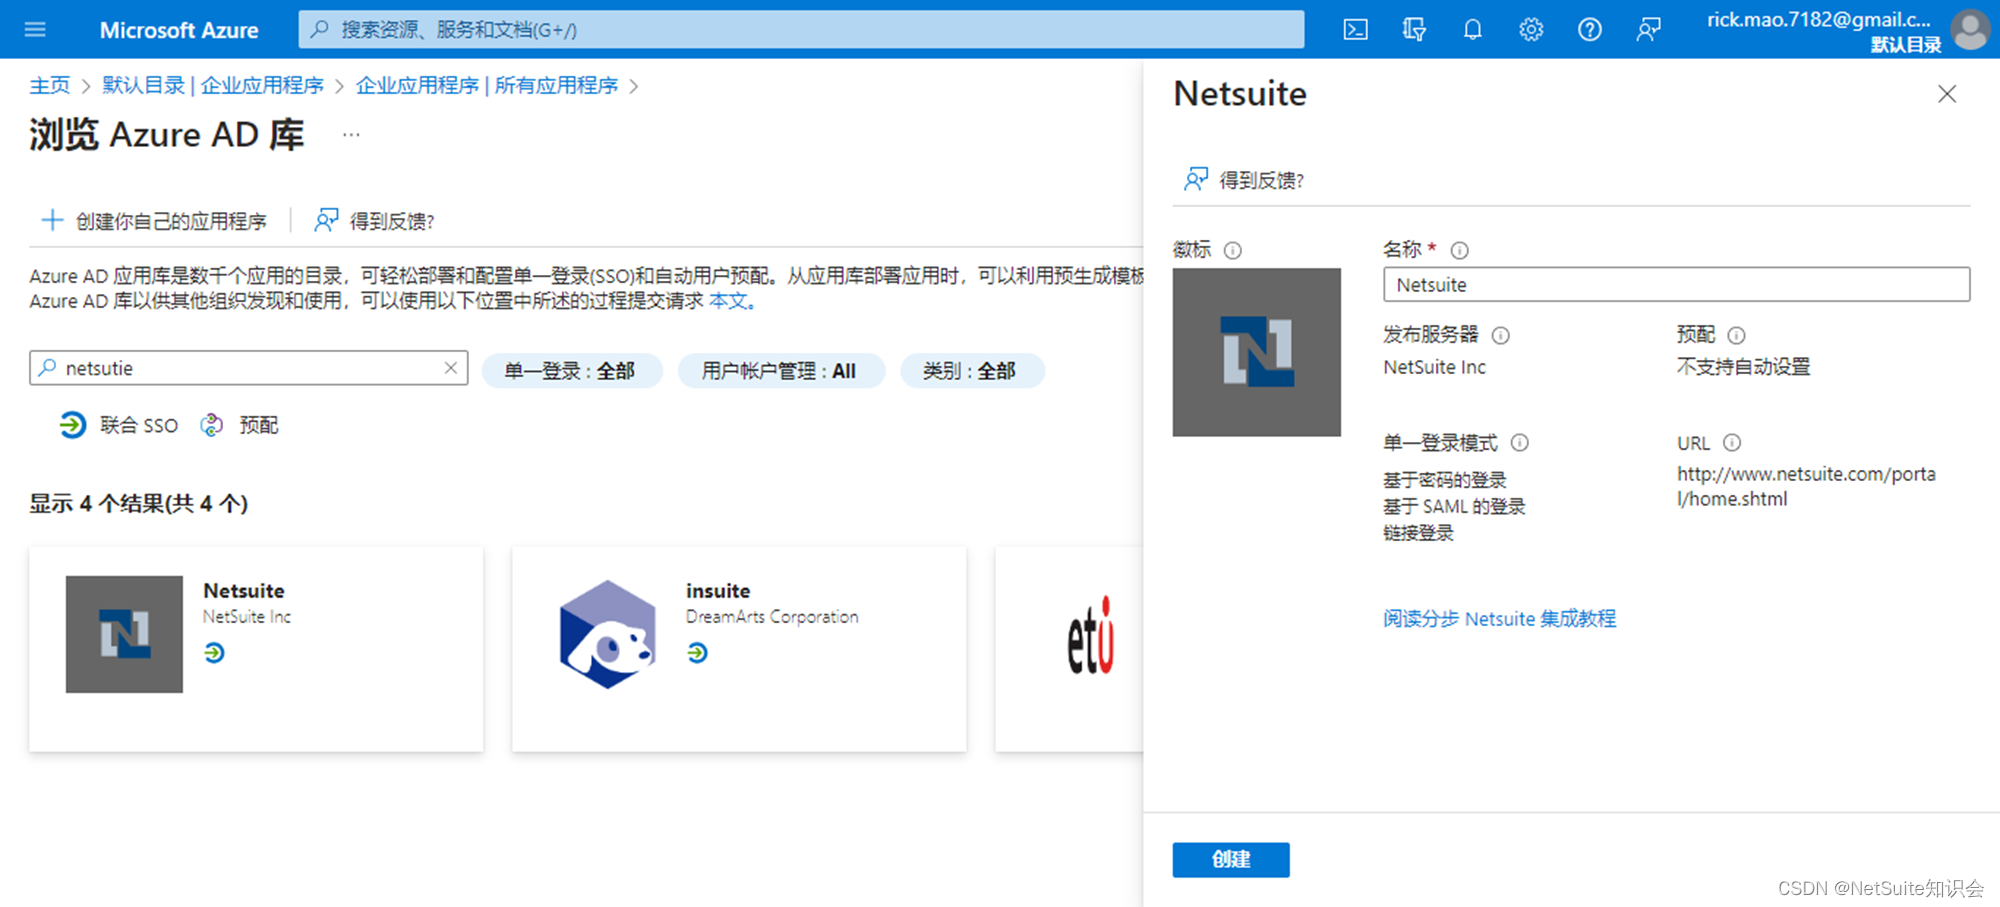 NetSuite OIDC、SAML SSO 演示